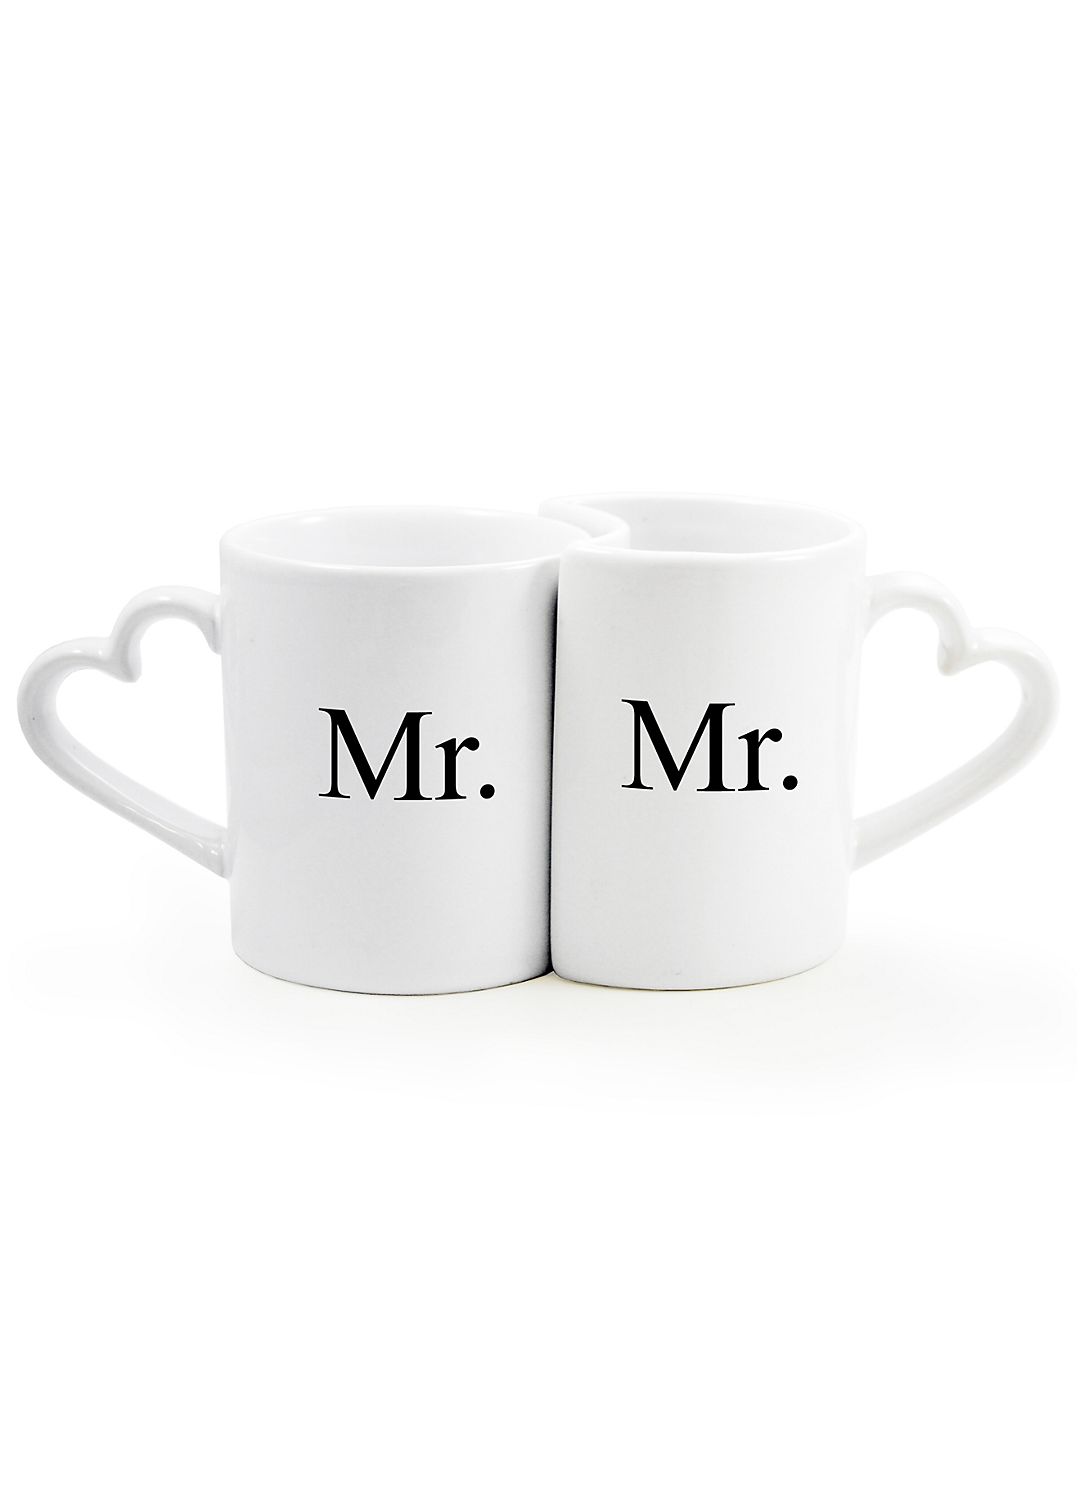 Mr. and Mr. Coffee Mug Set Image 1